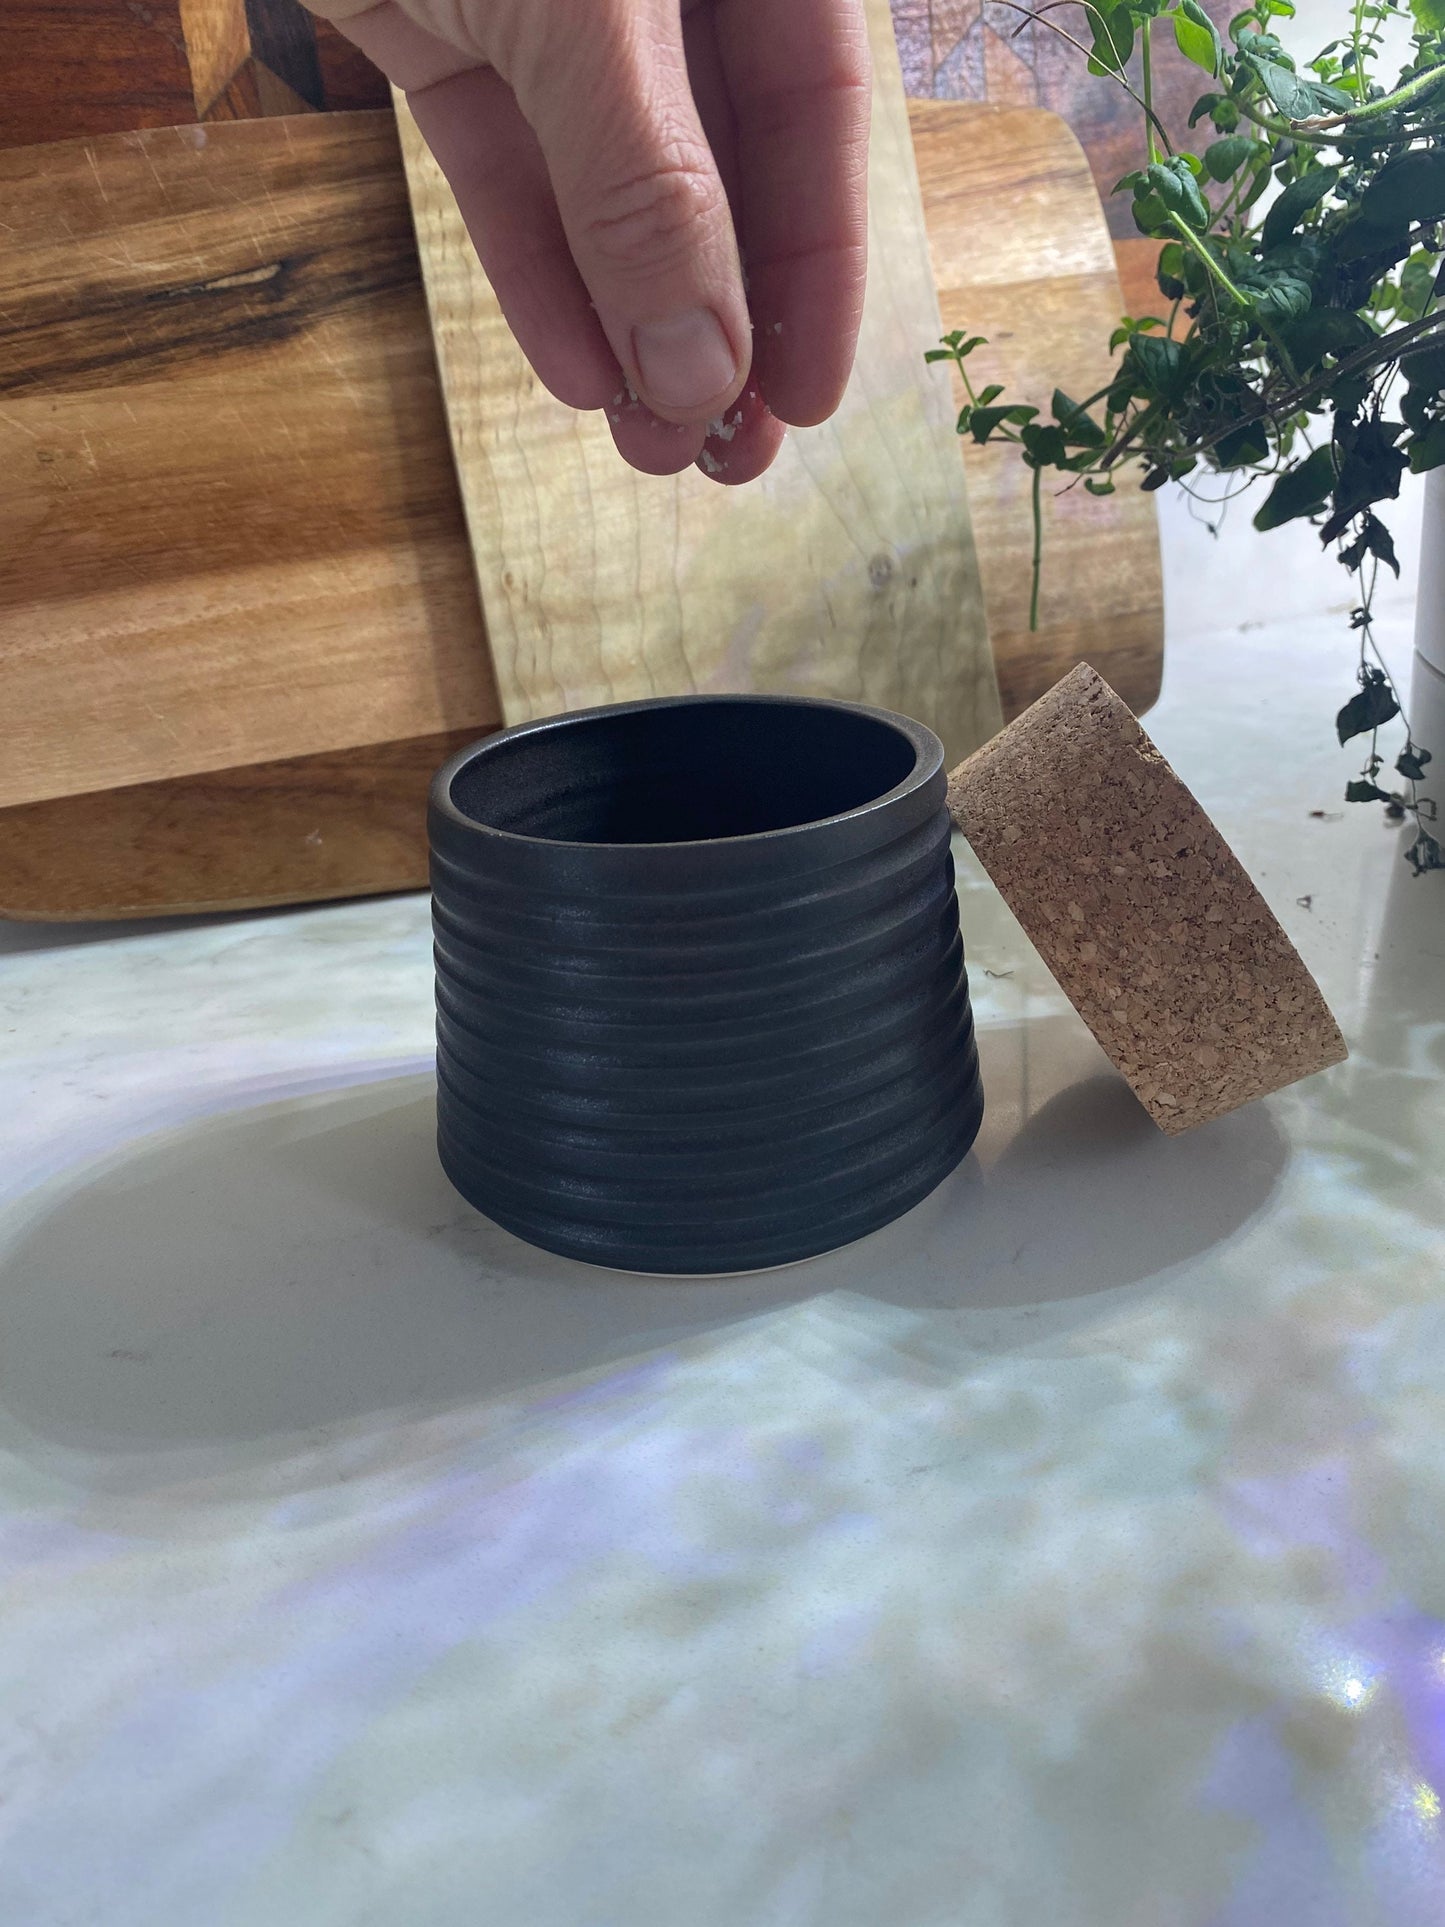 Pepo Ceramics Grooves Salt Cellar with Cork - wrought iron black